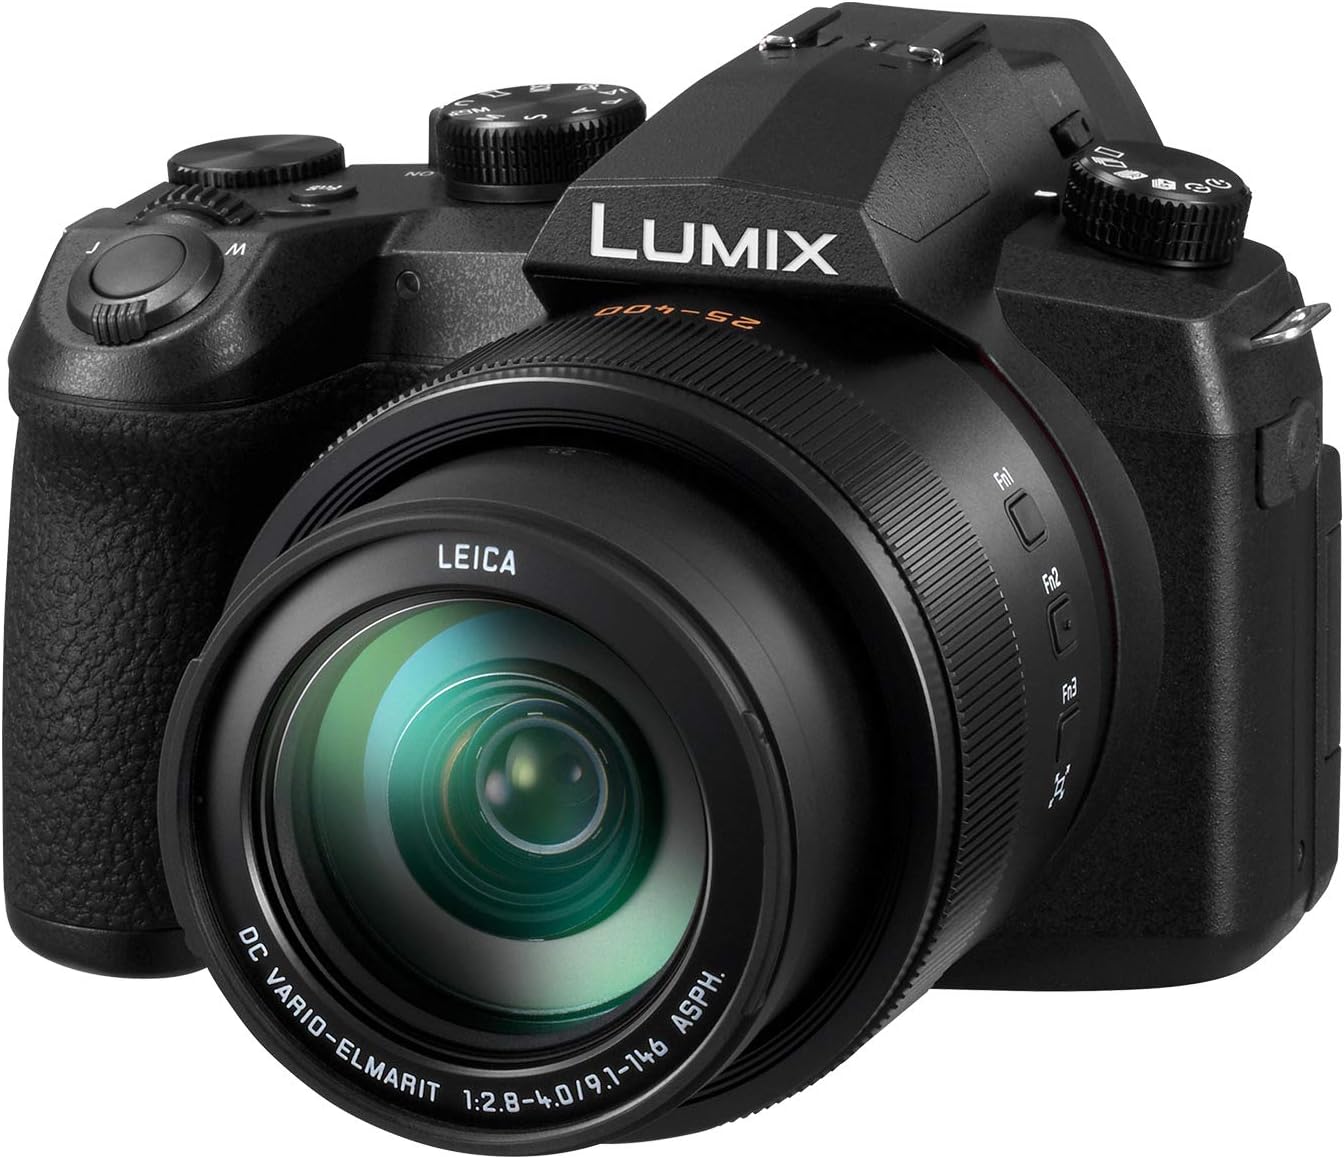 Panasonic Lumix FZ1000 II Review: Capture Stunning Photos and Videos